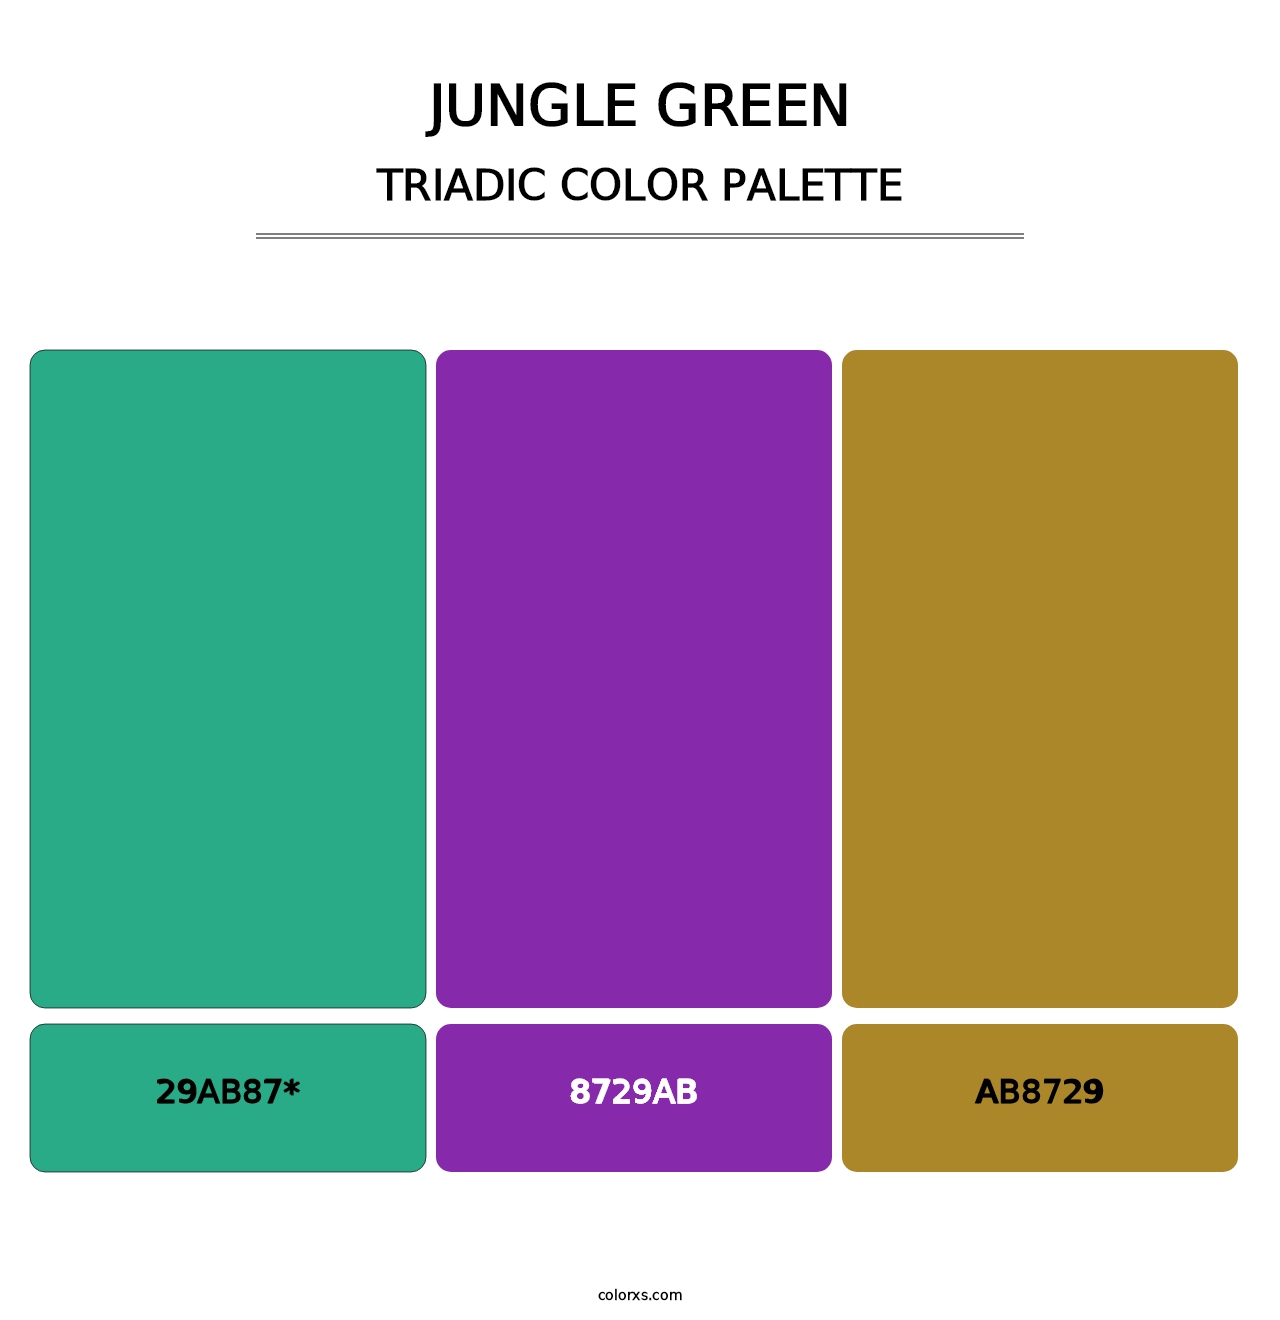 Jungle Green - Triadic Color Palette